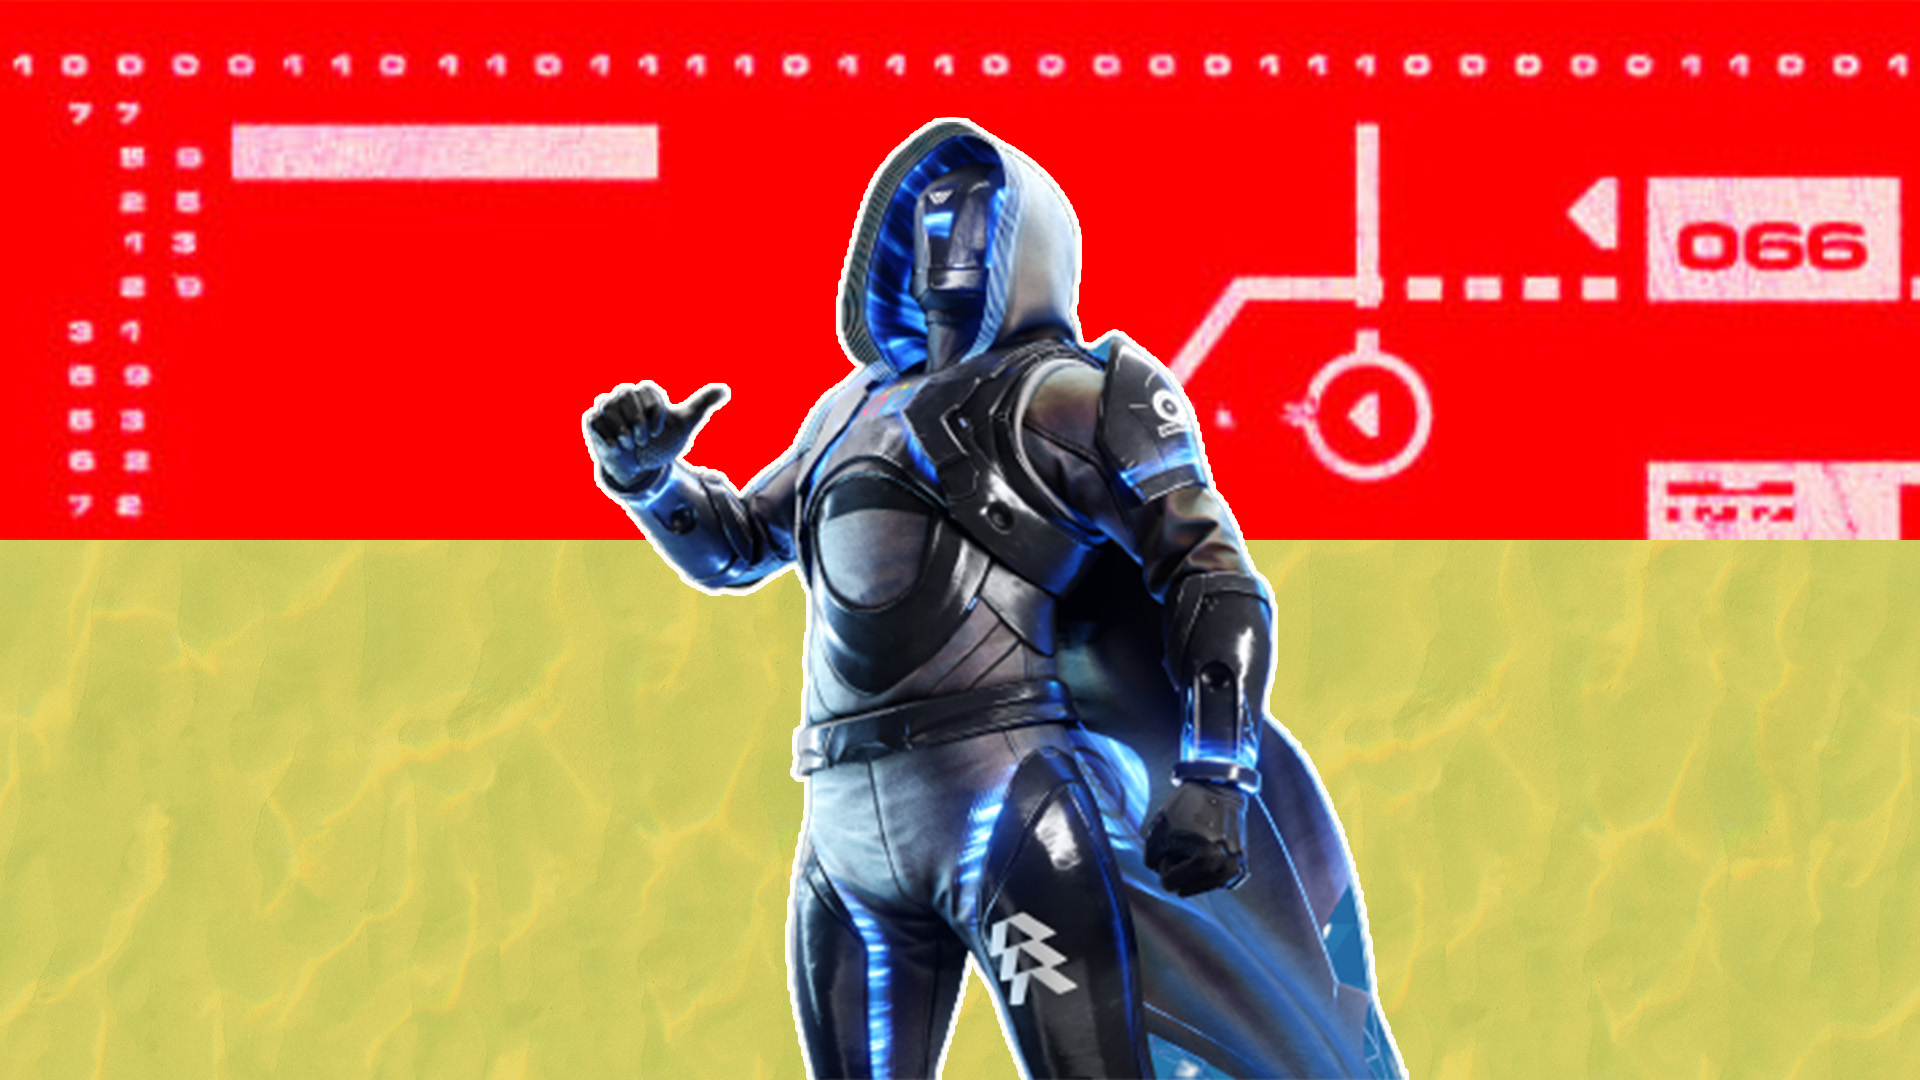 Destiny 2 community event emblem has a secret message